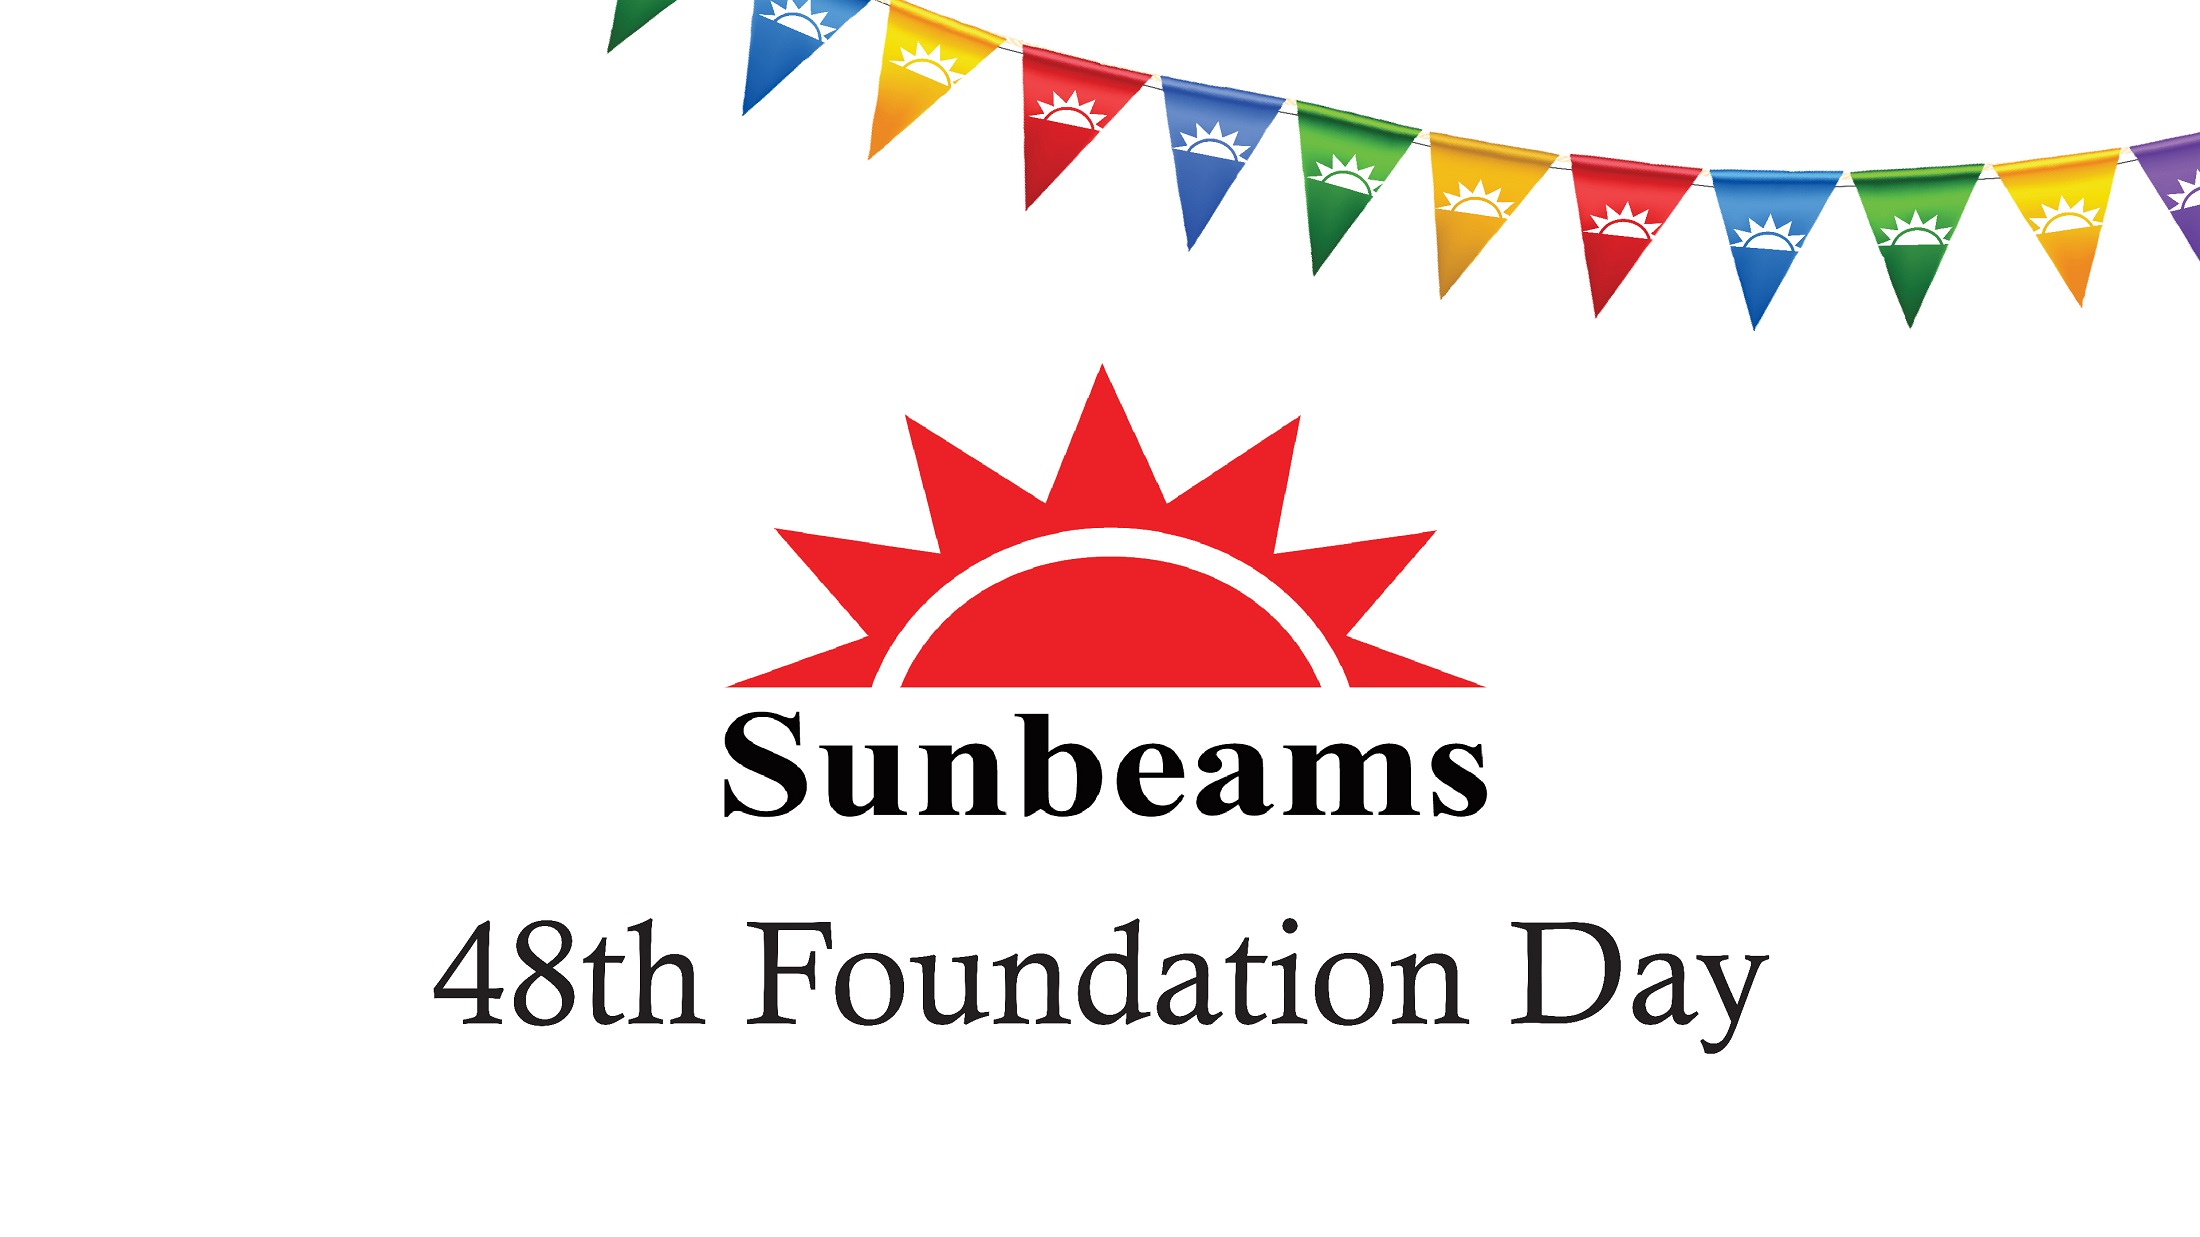 Sunbeams Foundation day